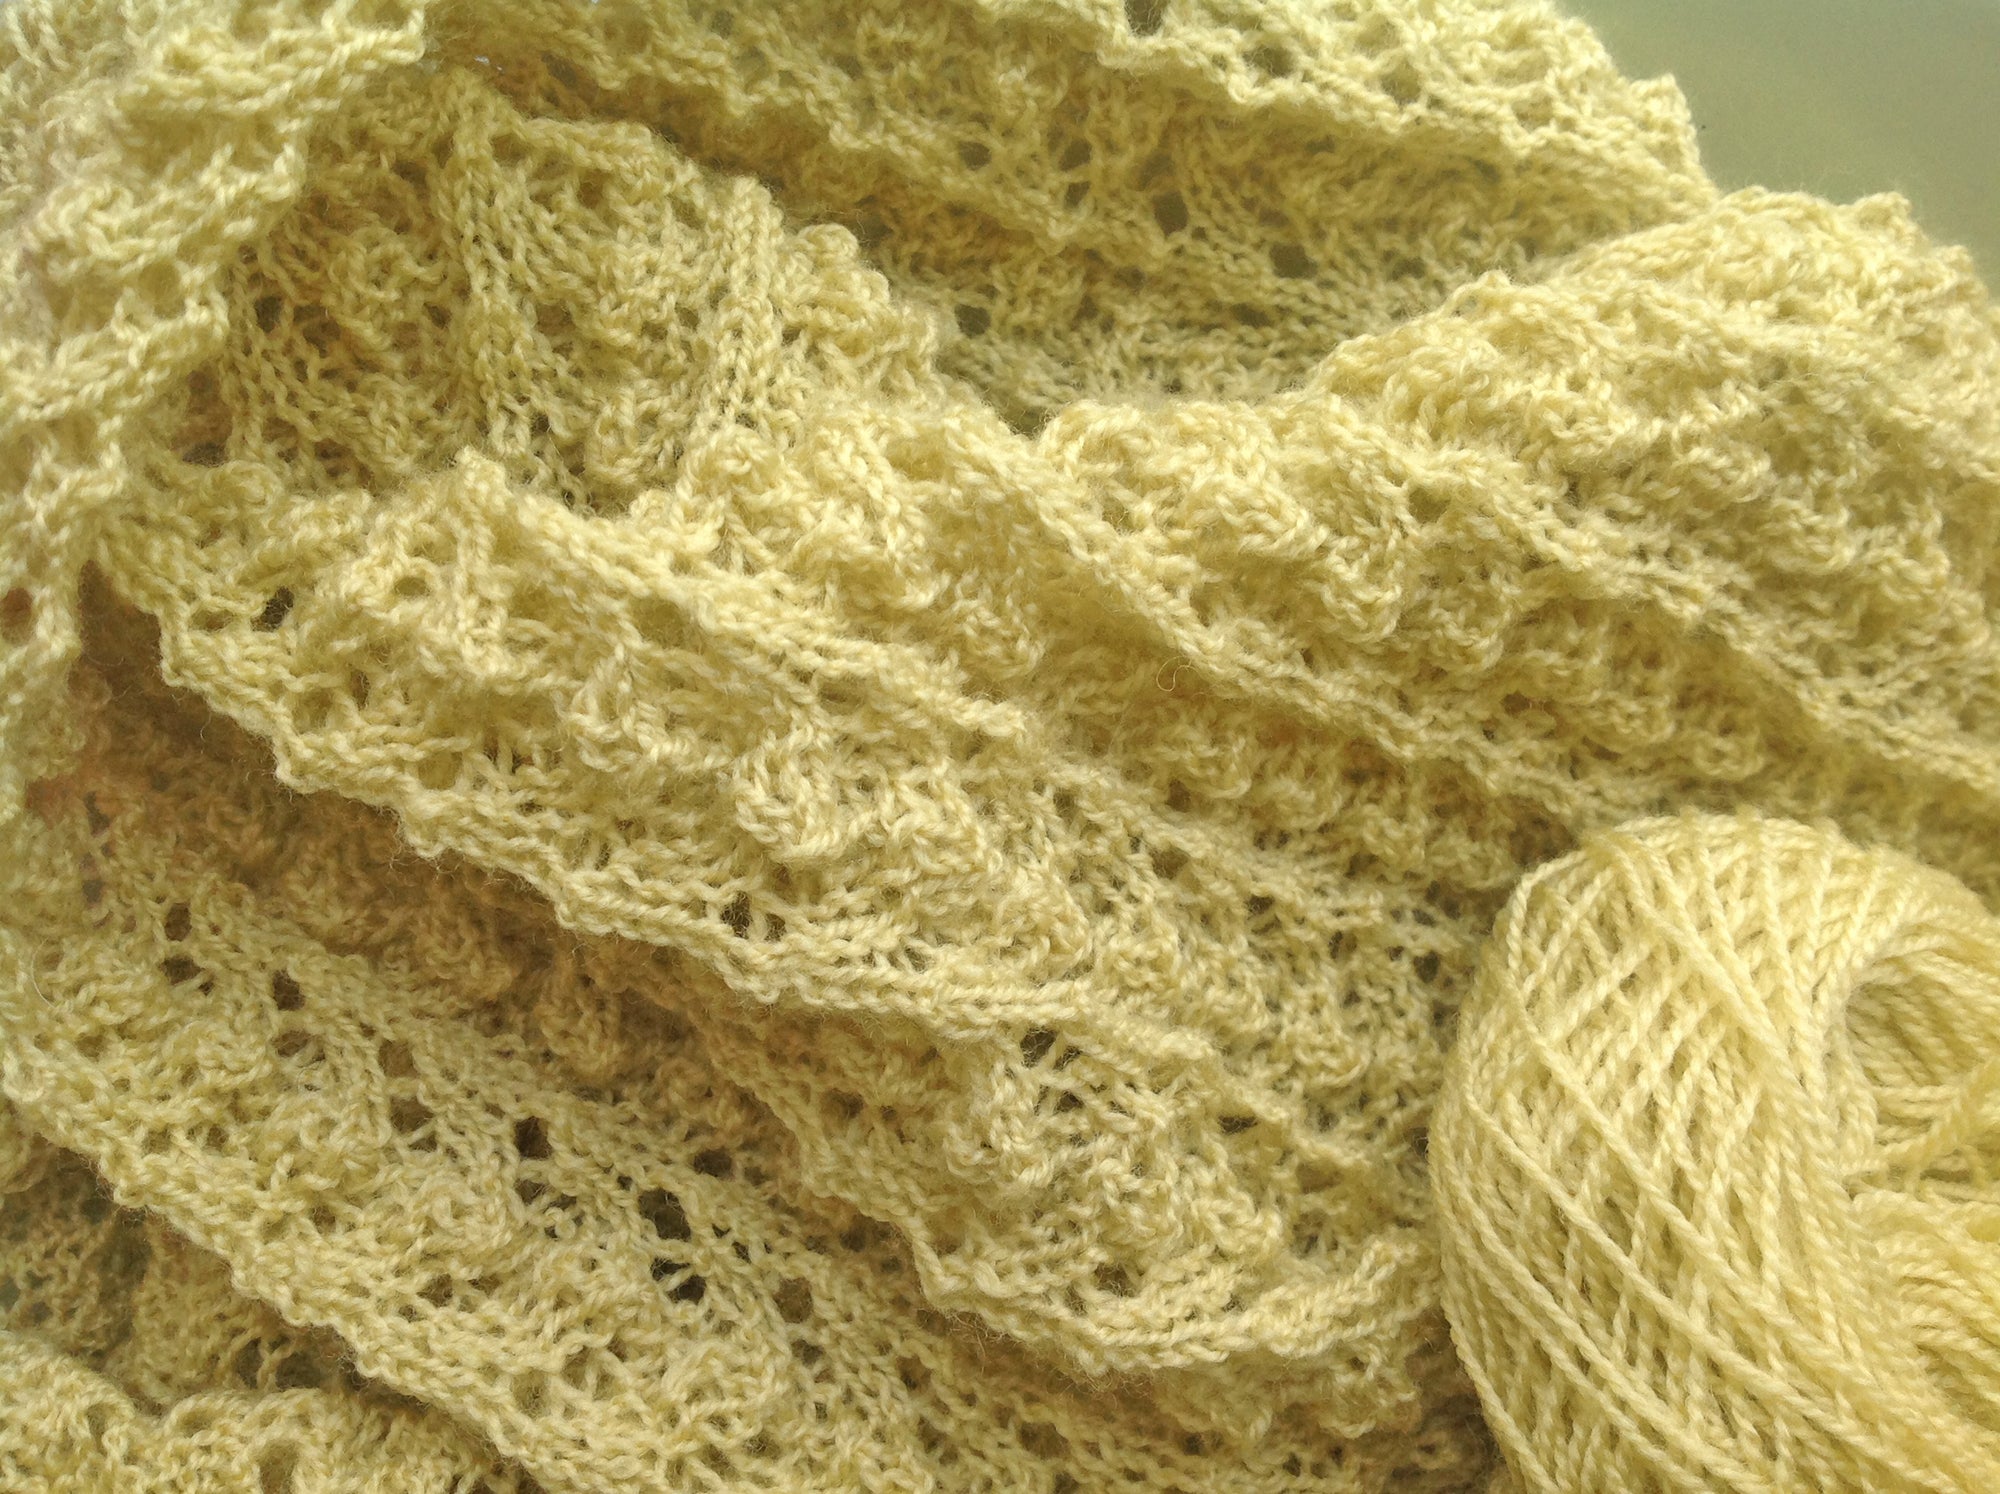 Develop your knitting skills at Seam Haberdashery